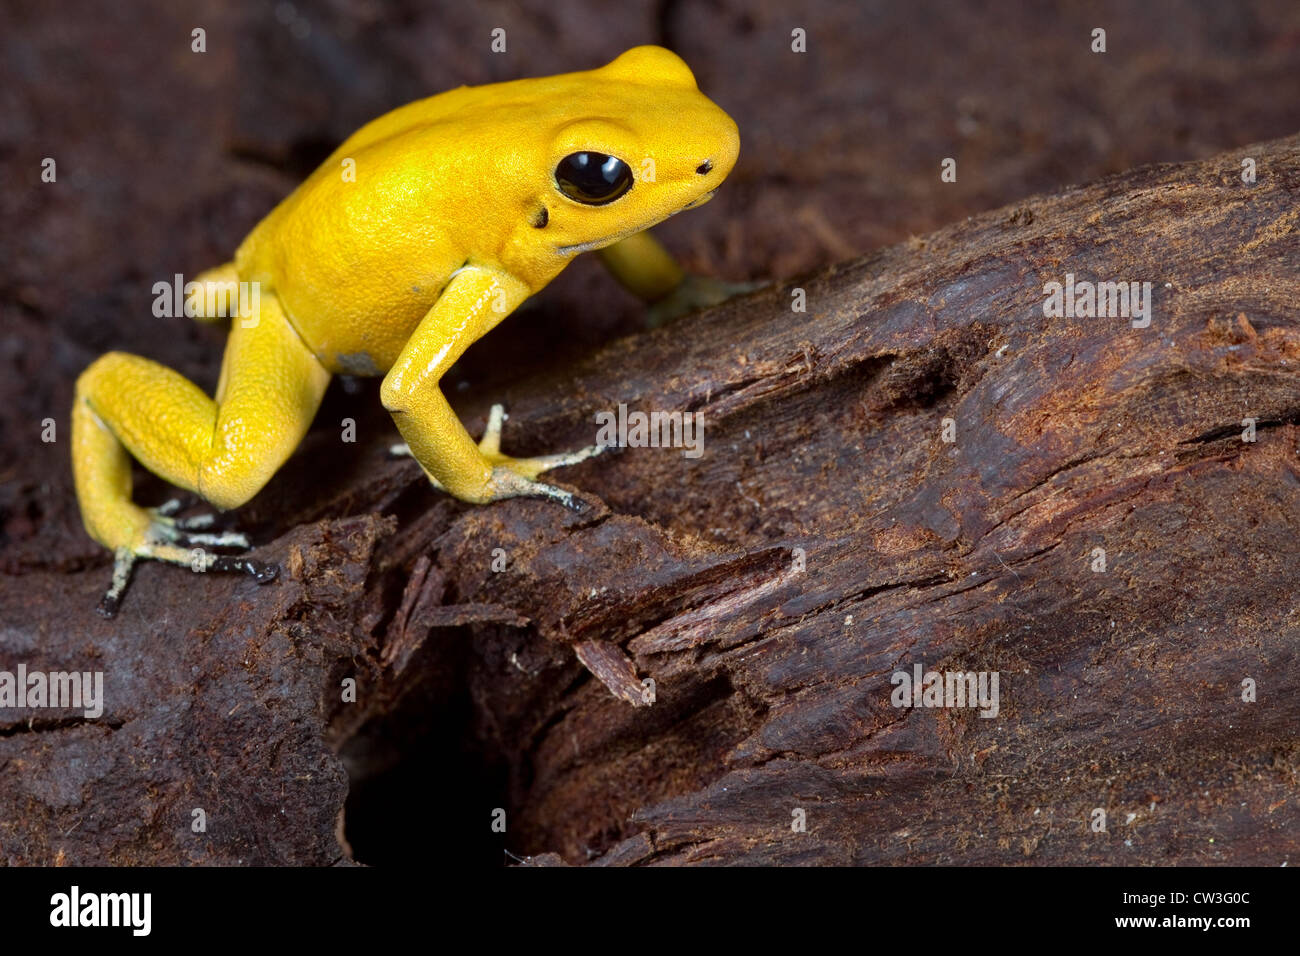 Frosch sehr giftige Tier mit Warnung Farben Phyllobates Terribilis Kolumbien Amazonas Regenwald giftigen Amphibien zu vergiften Stockfoto